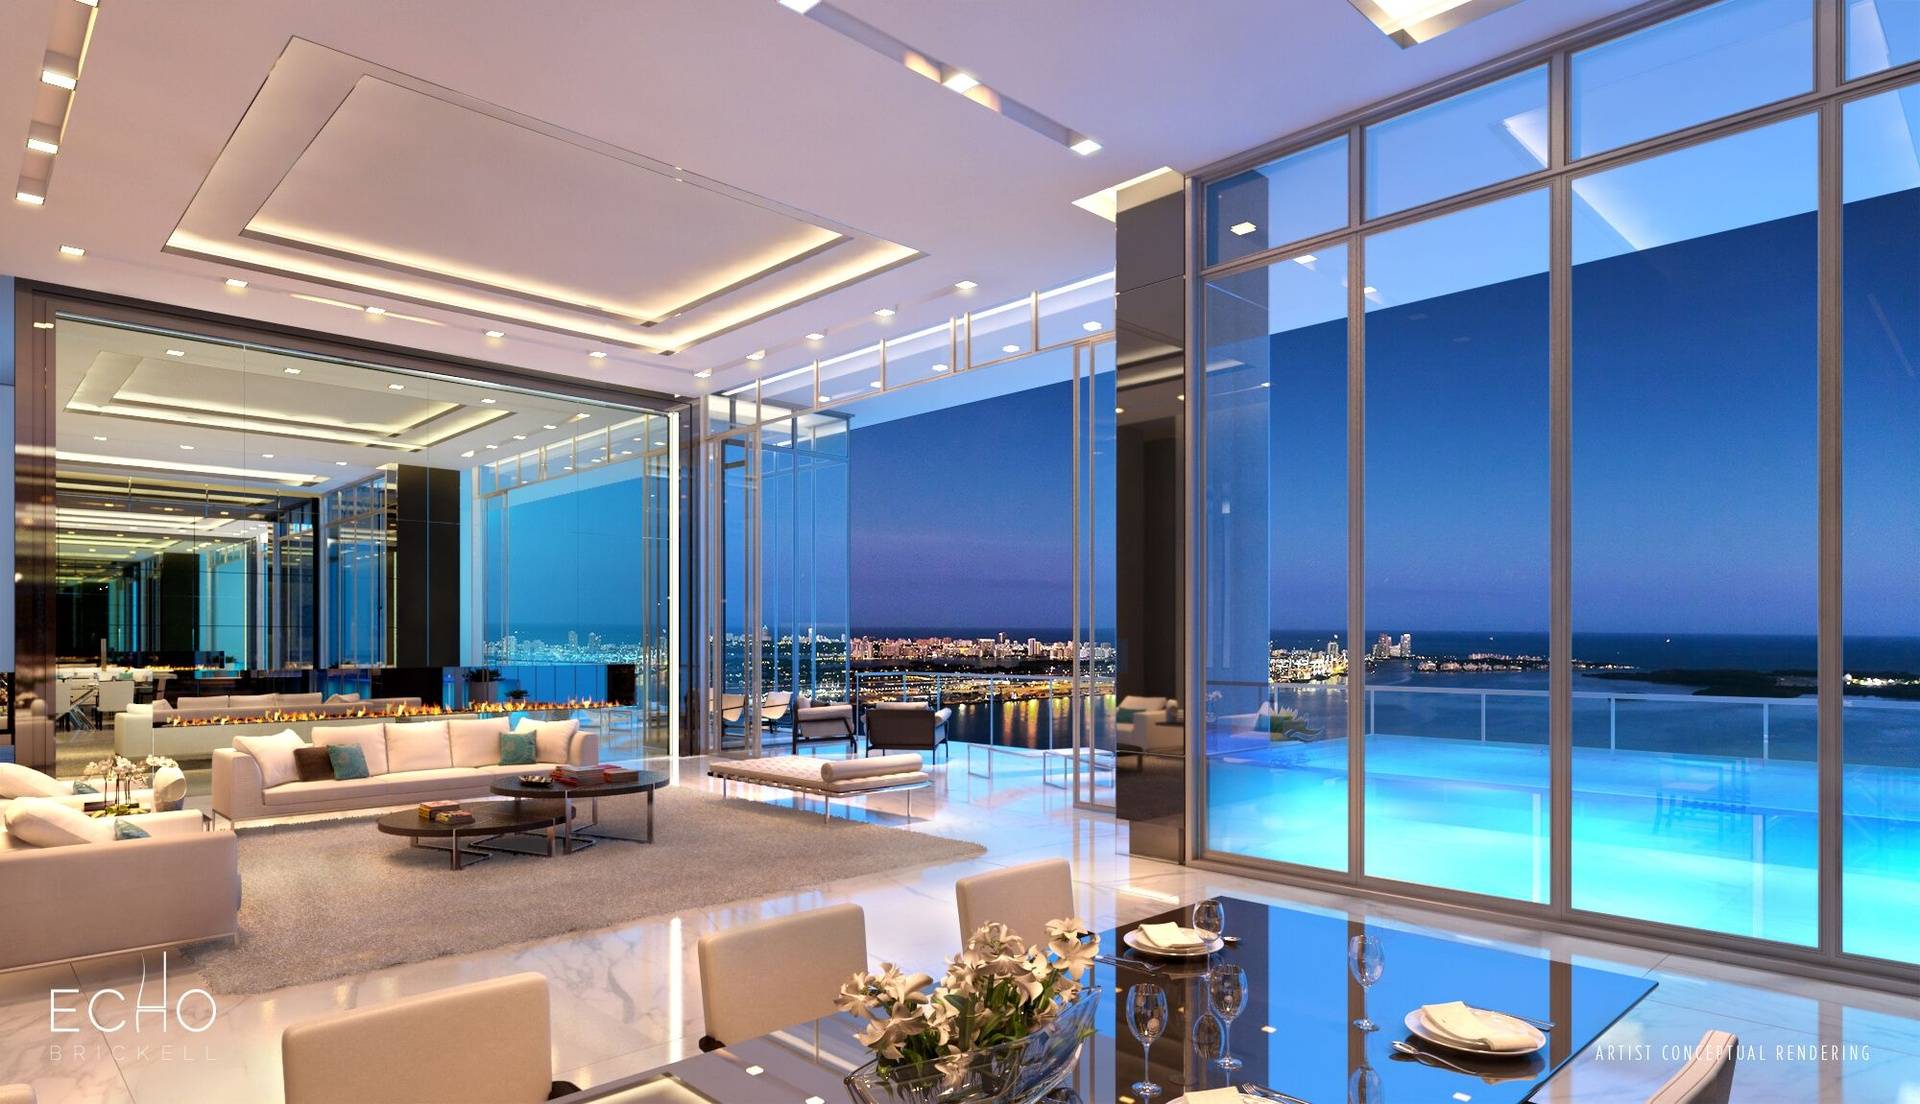 Echo Brickell (Miami Luxury Water View Penthouse)